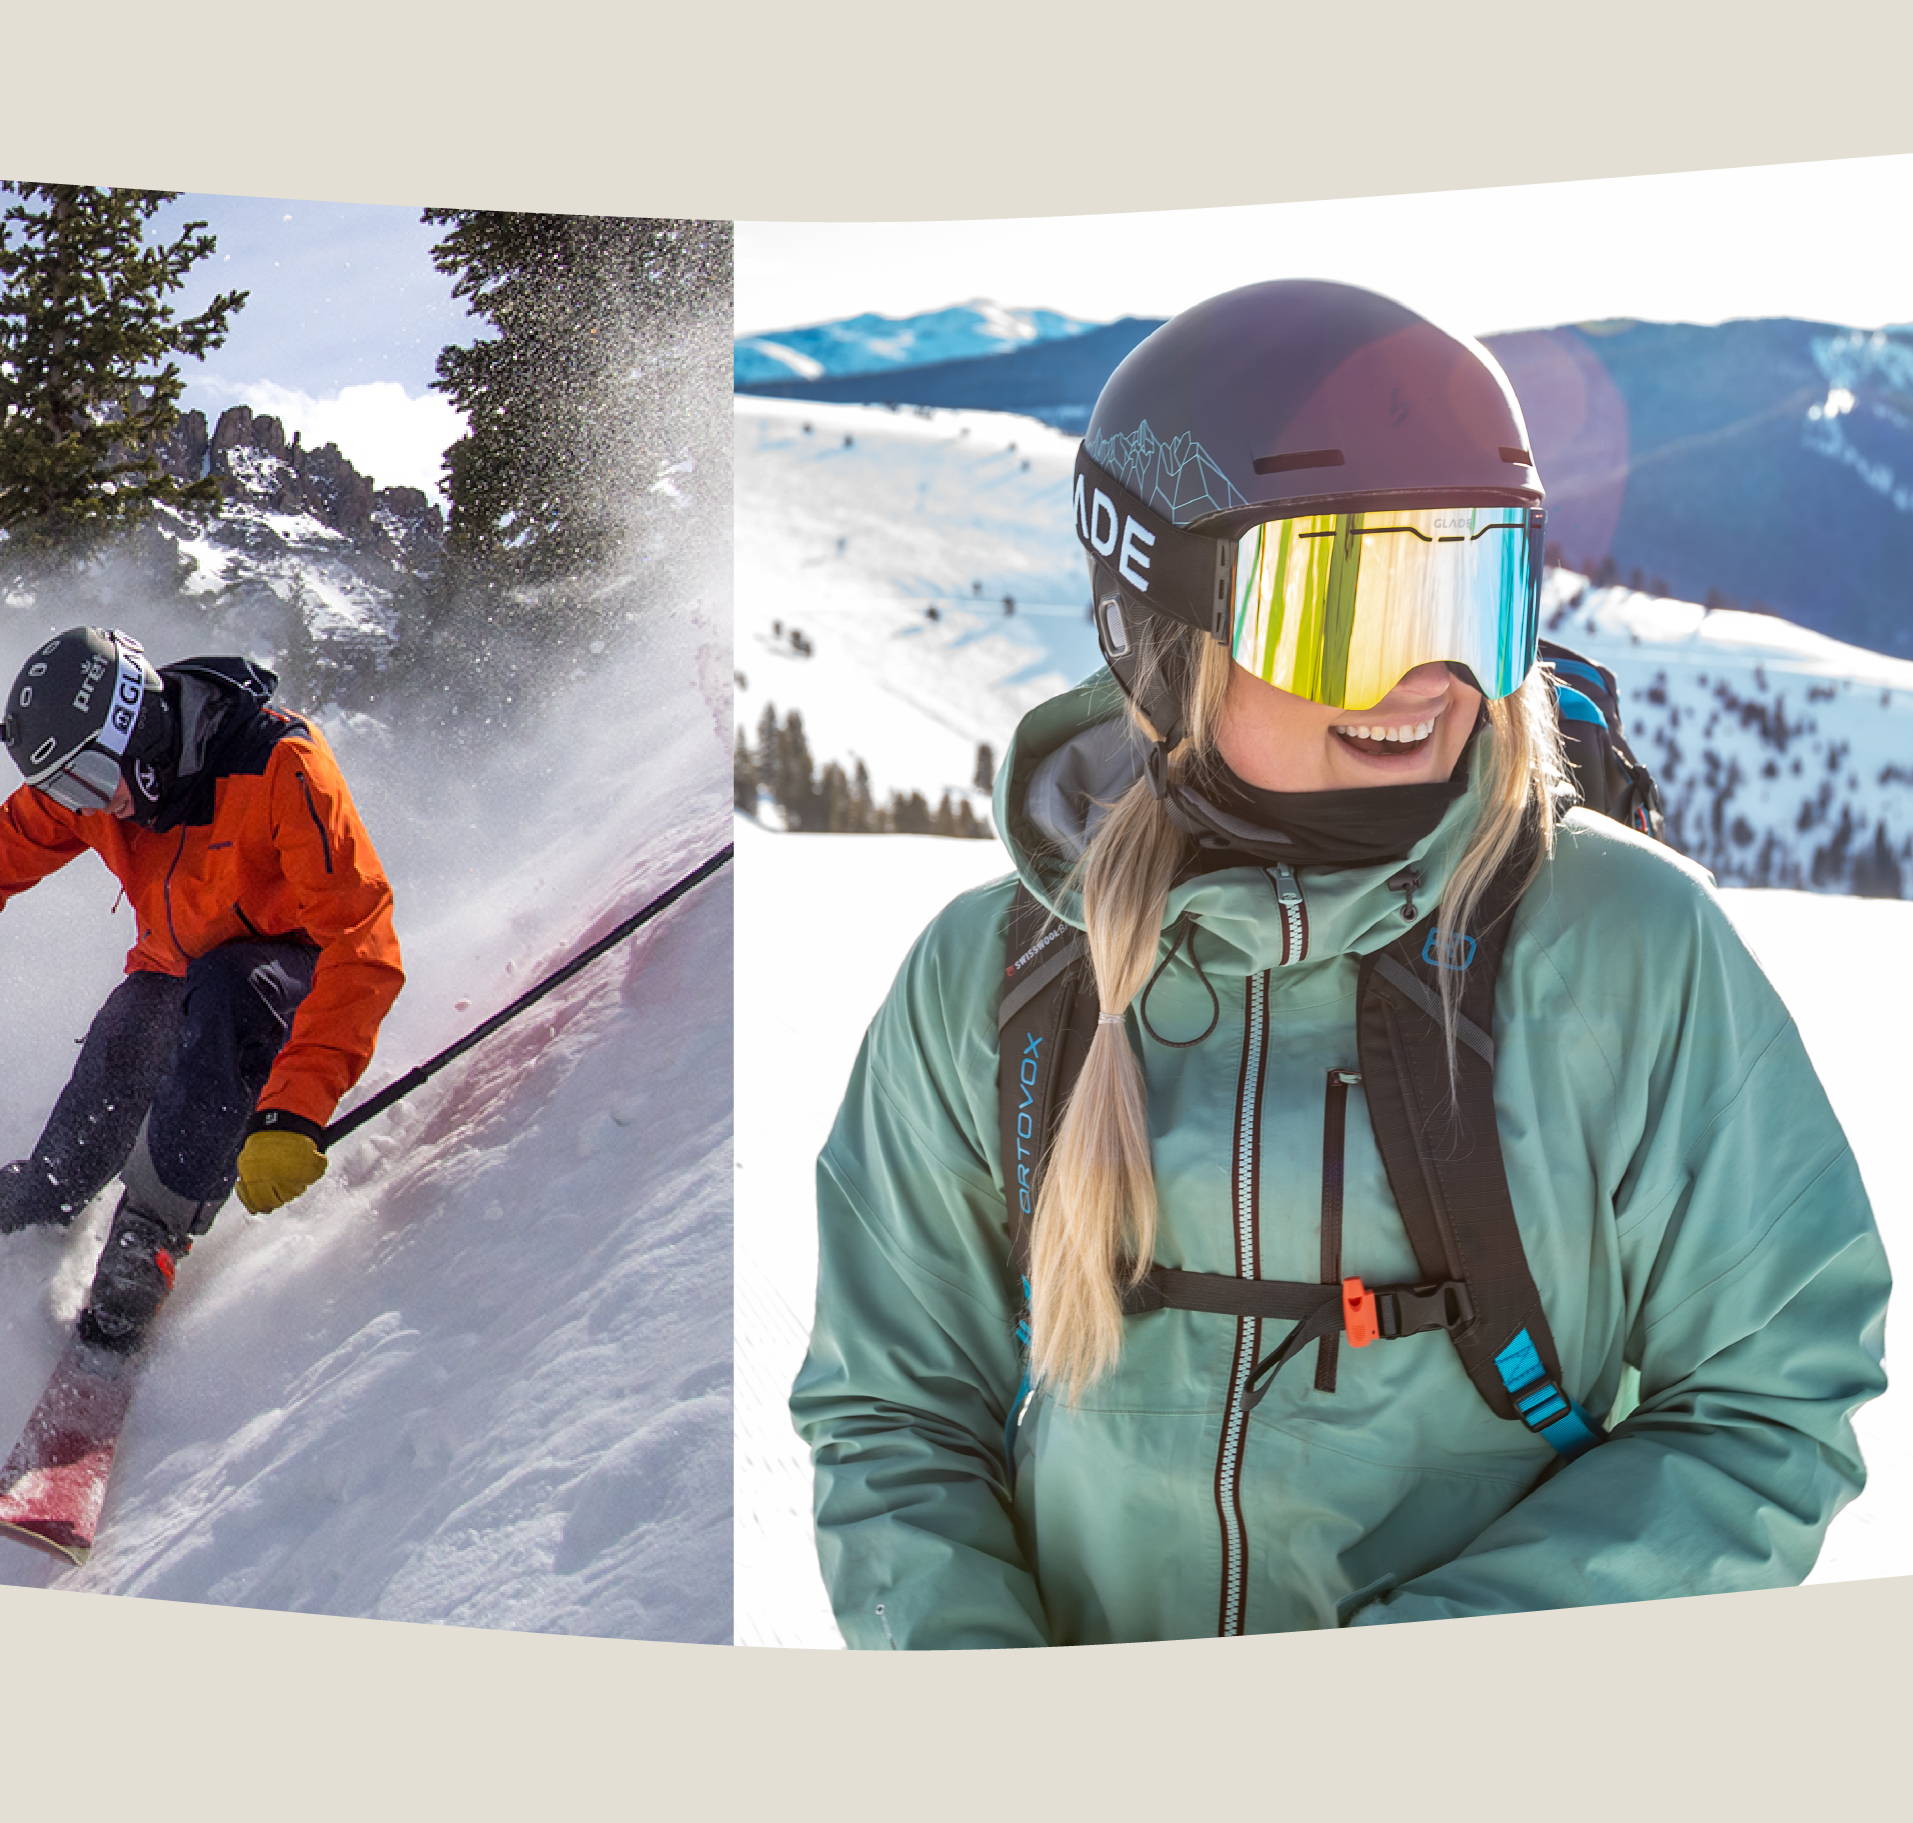 Glade Ski Goggles - The best ski and snowboard goggles under $100